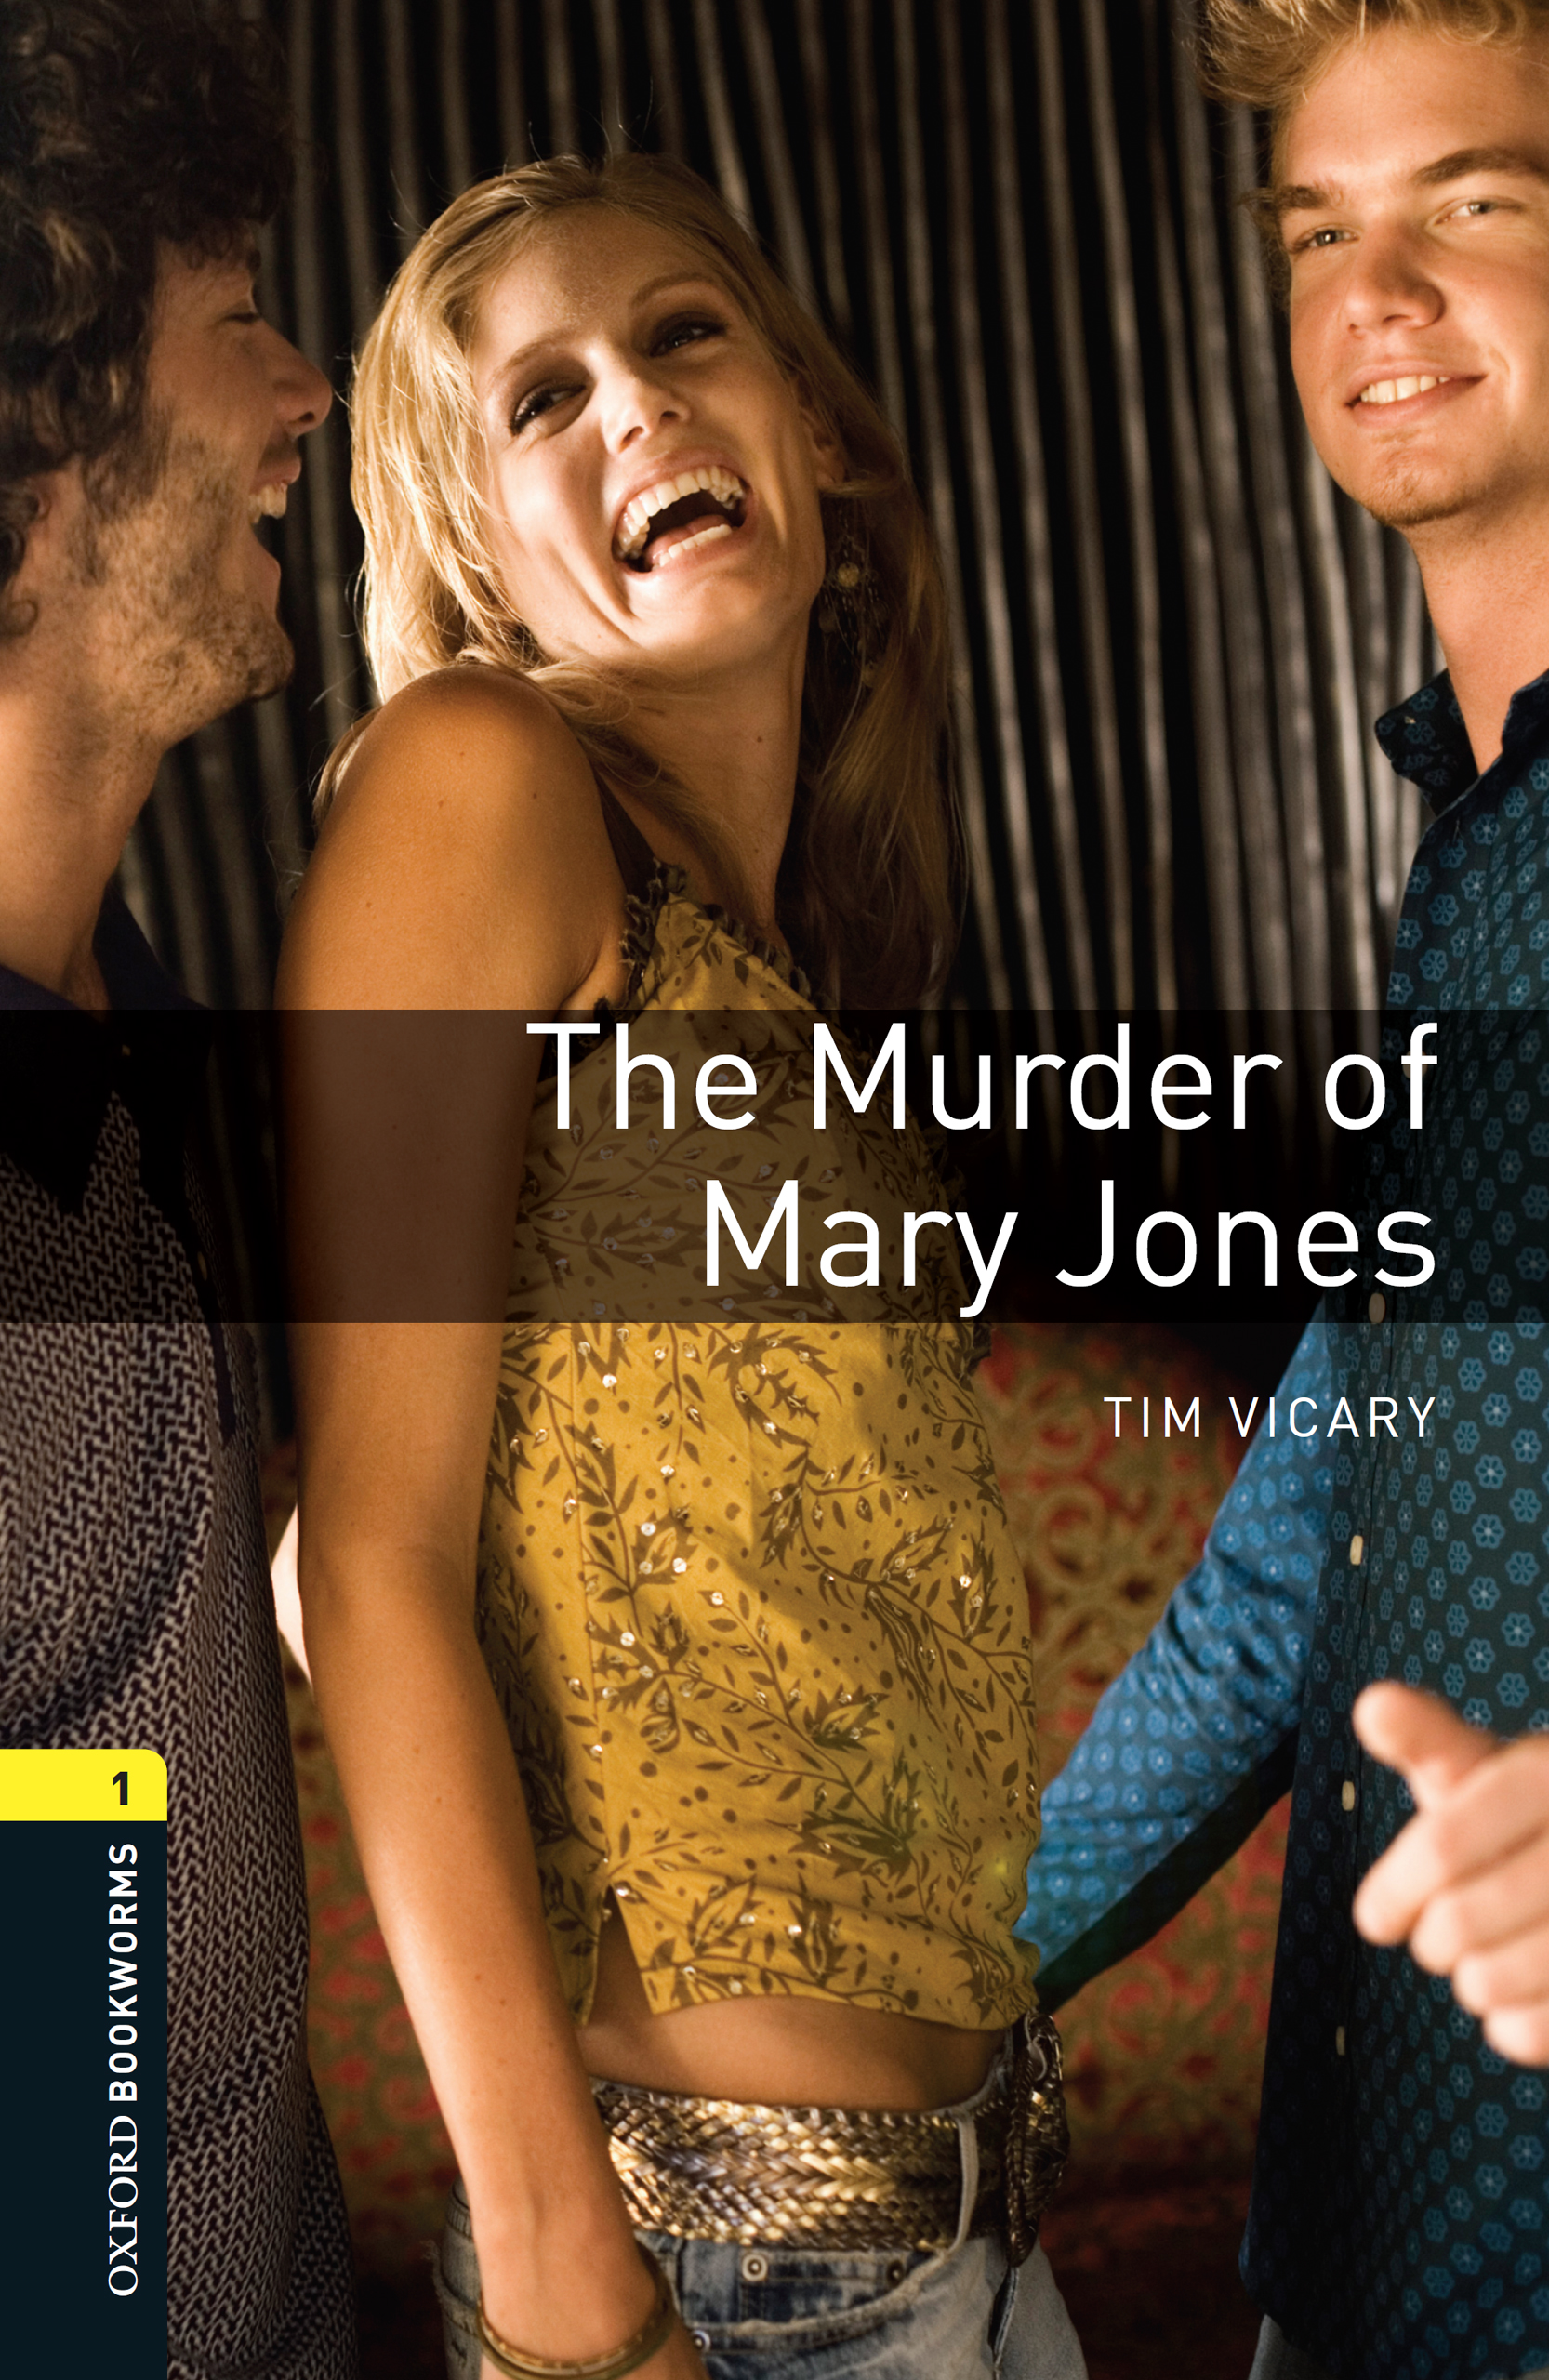 The Murder of Mary Jones